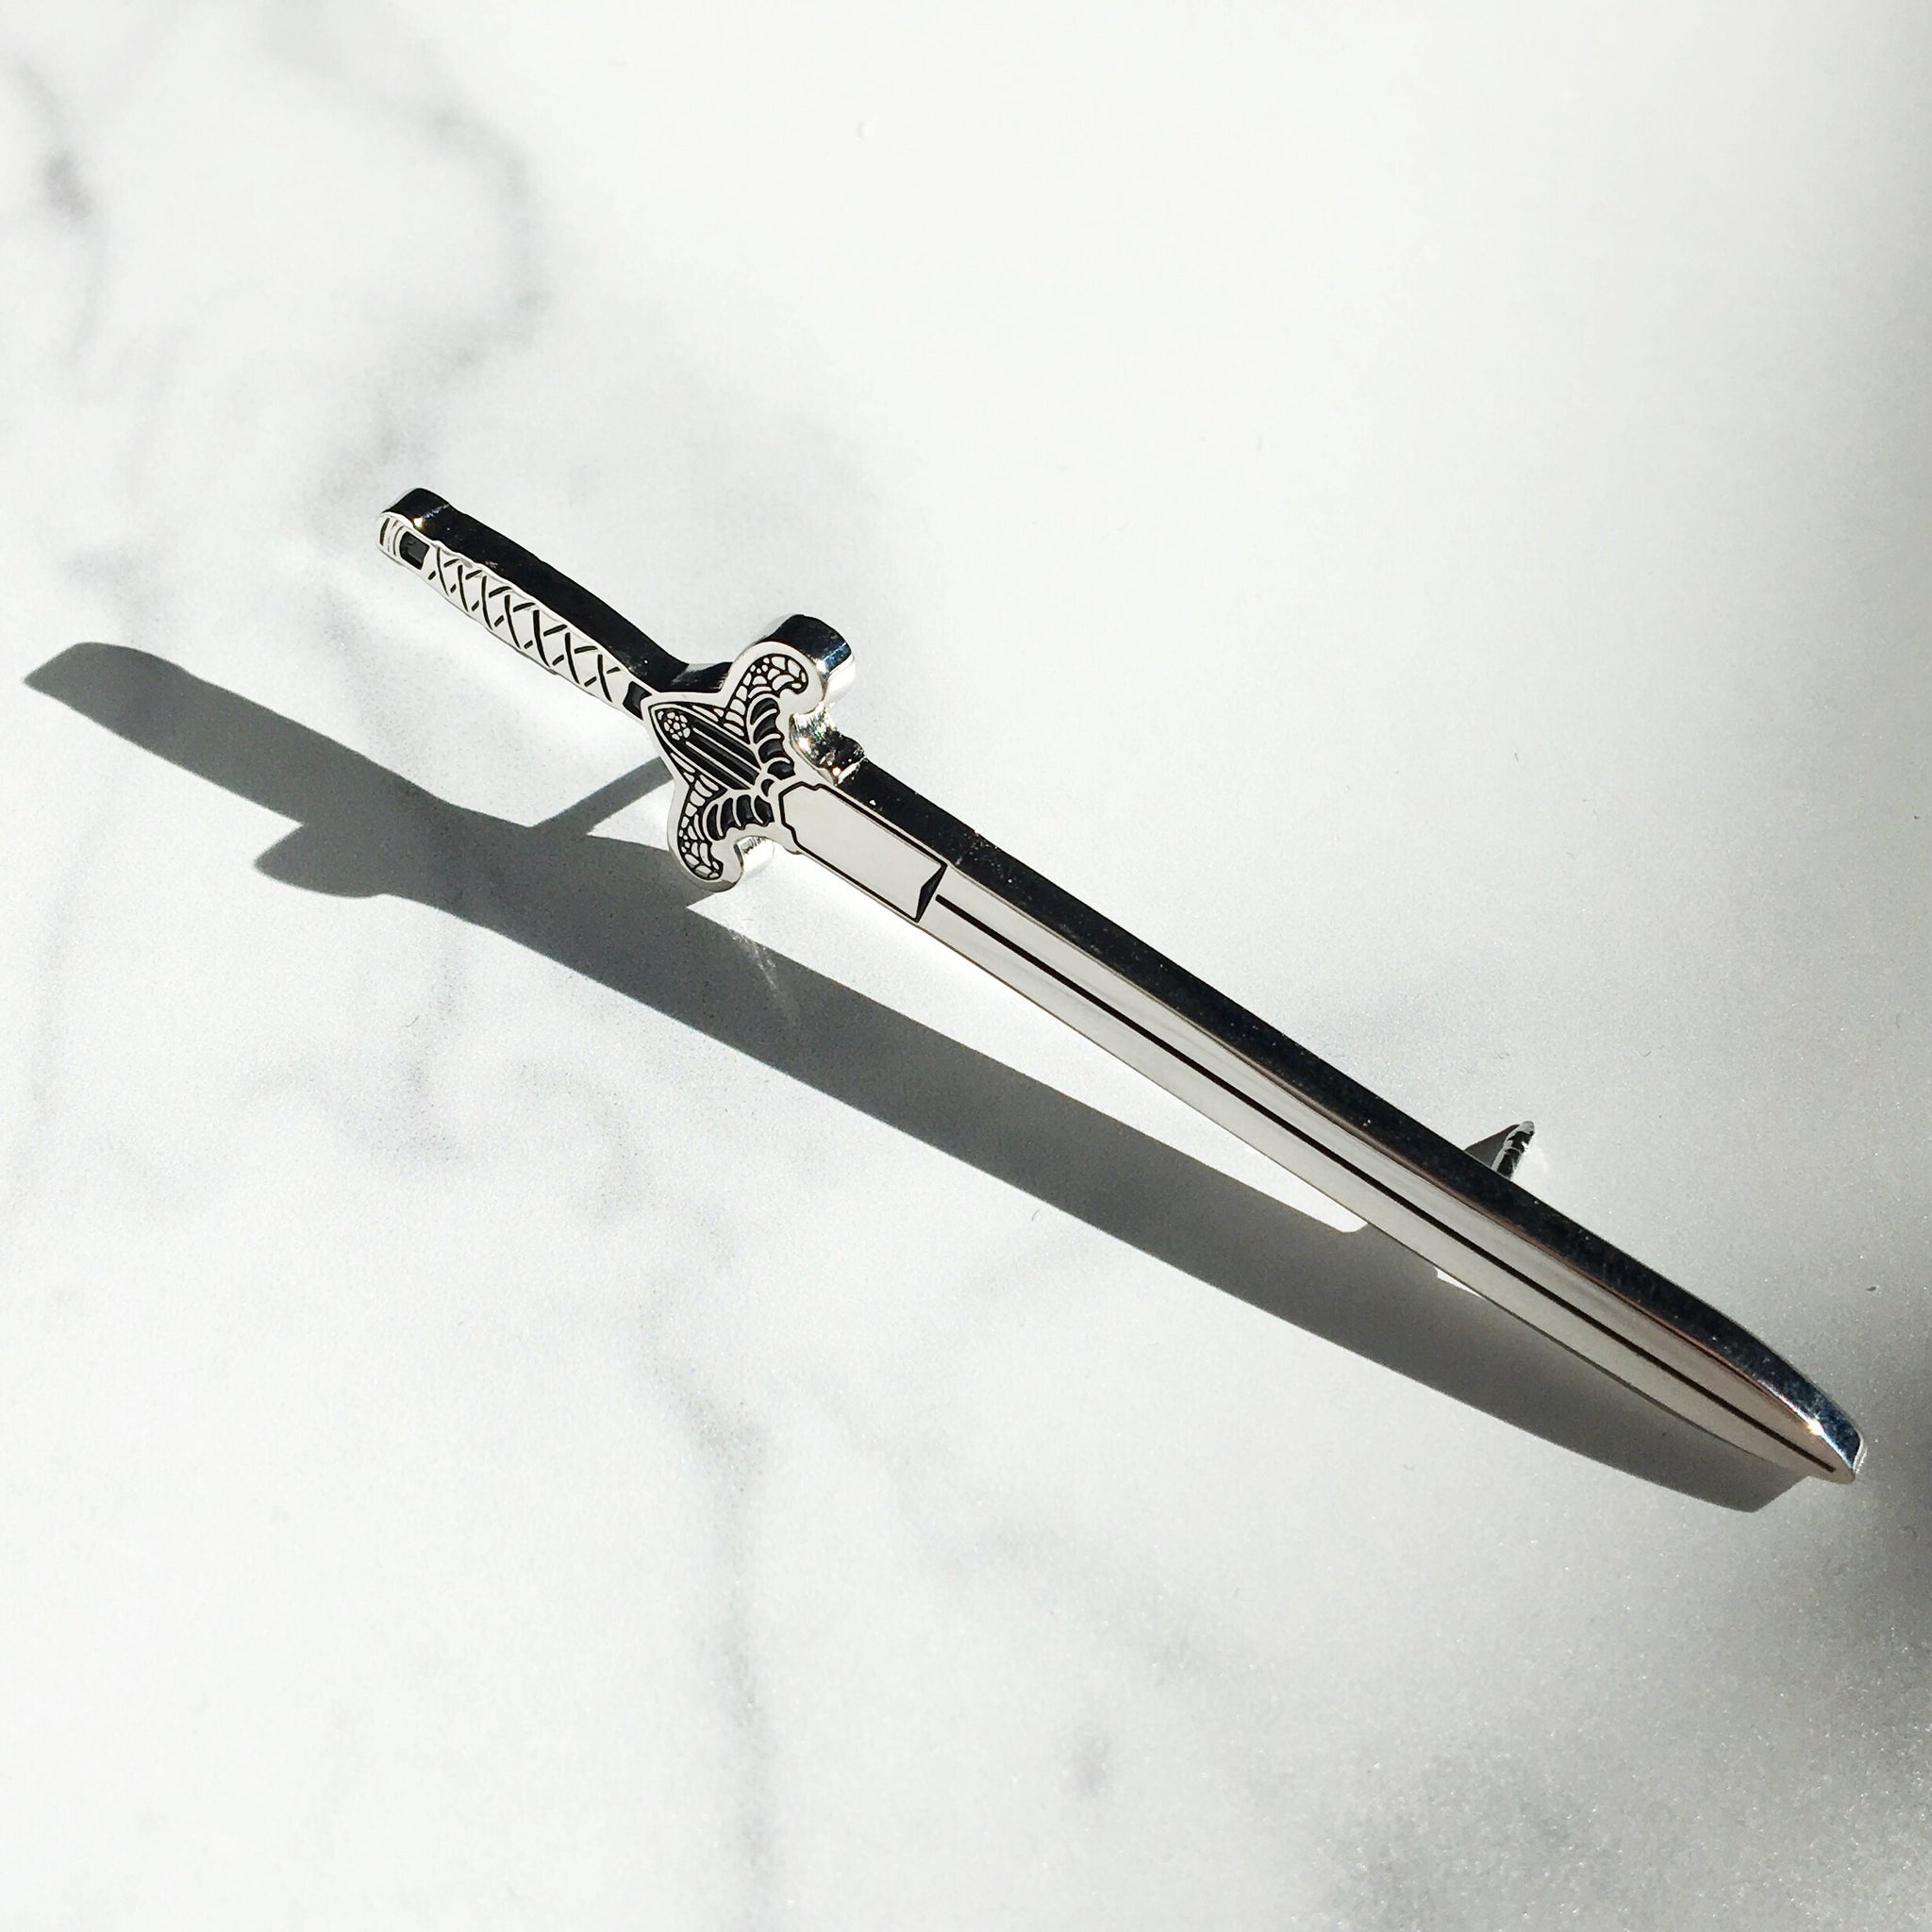 Gothic Sword enamel pin in silver and black enamel.